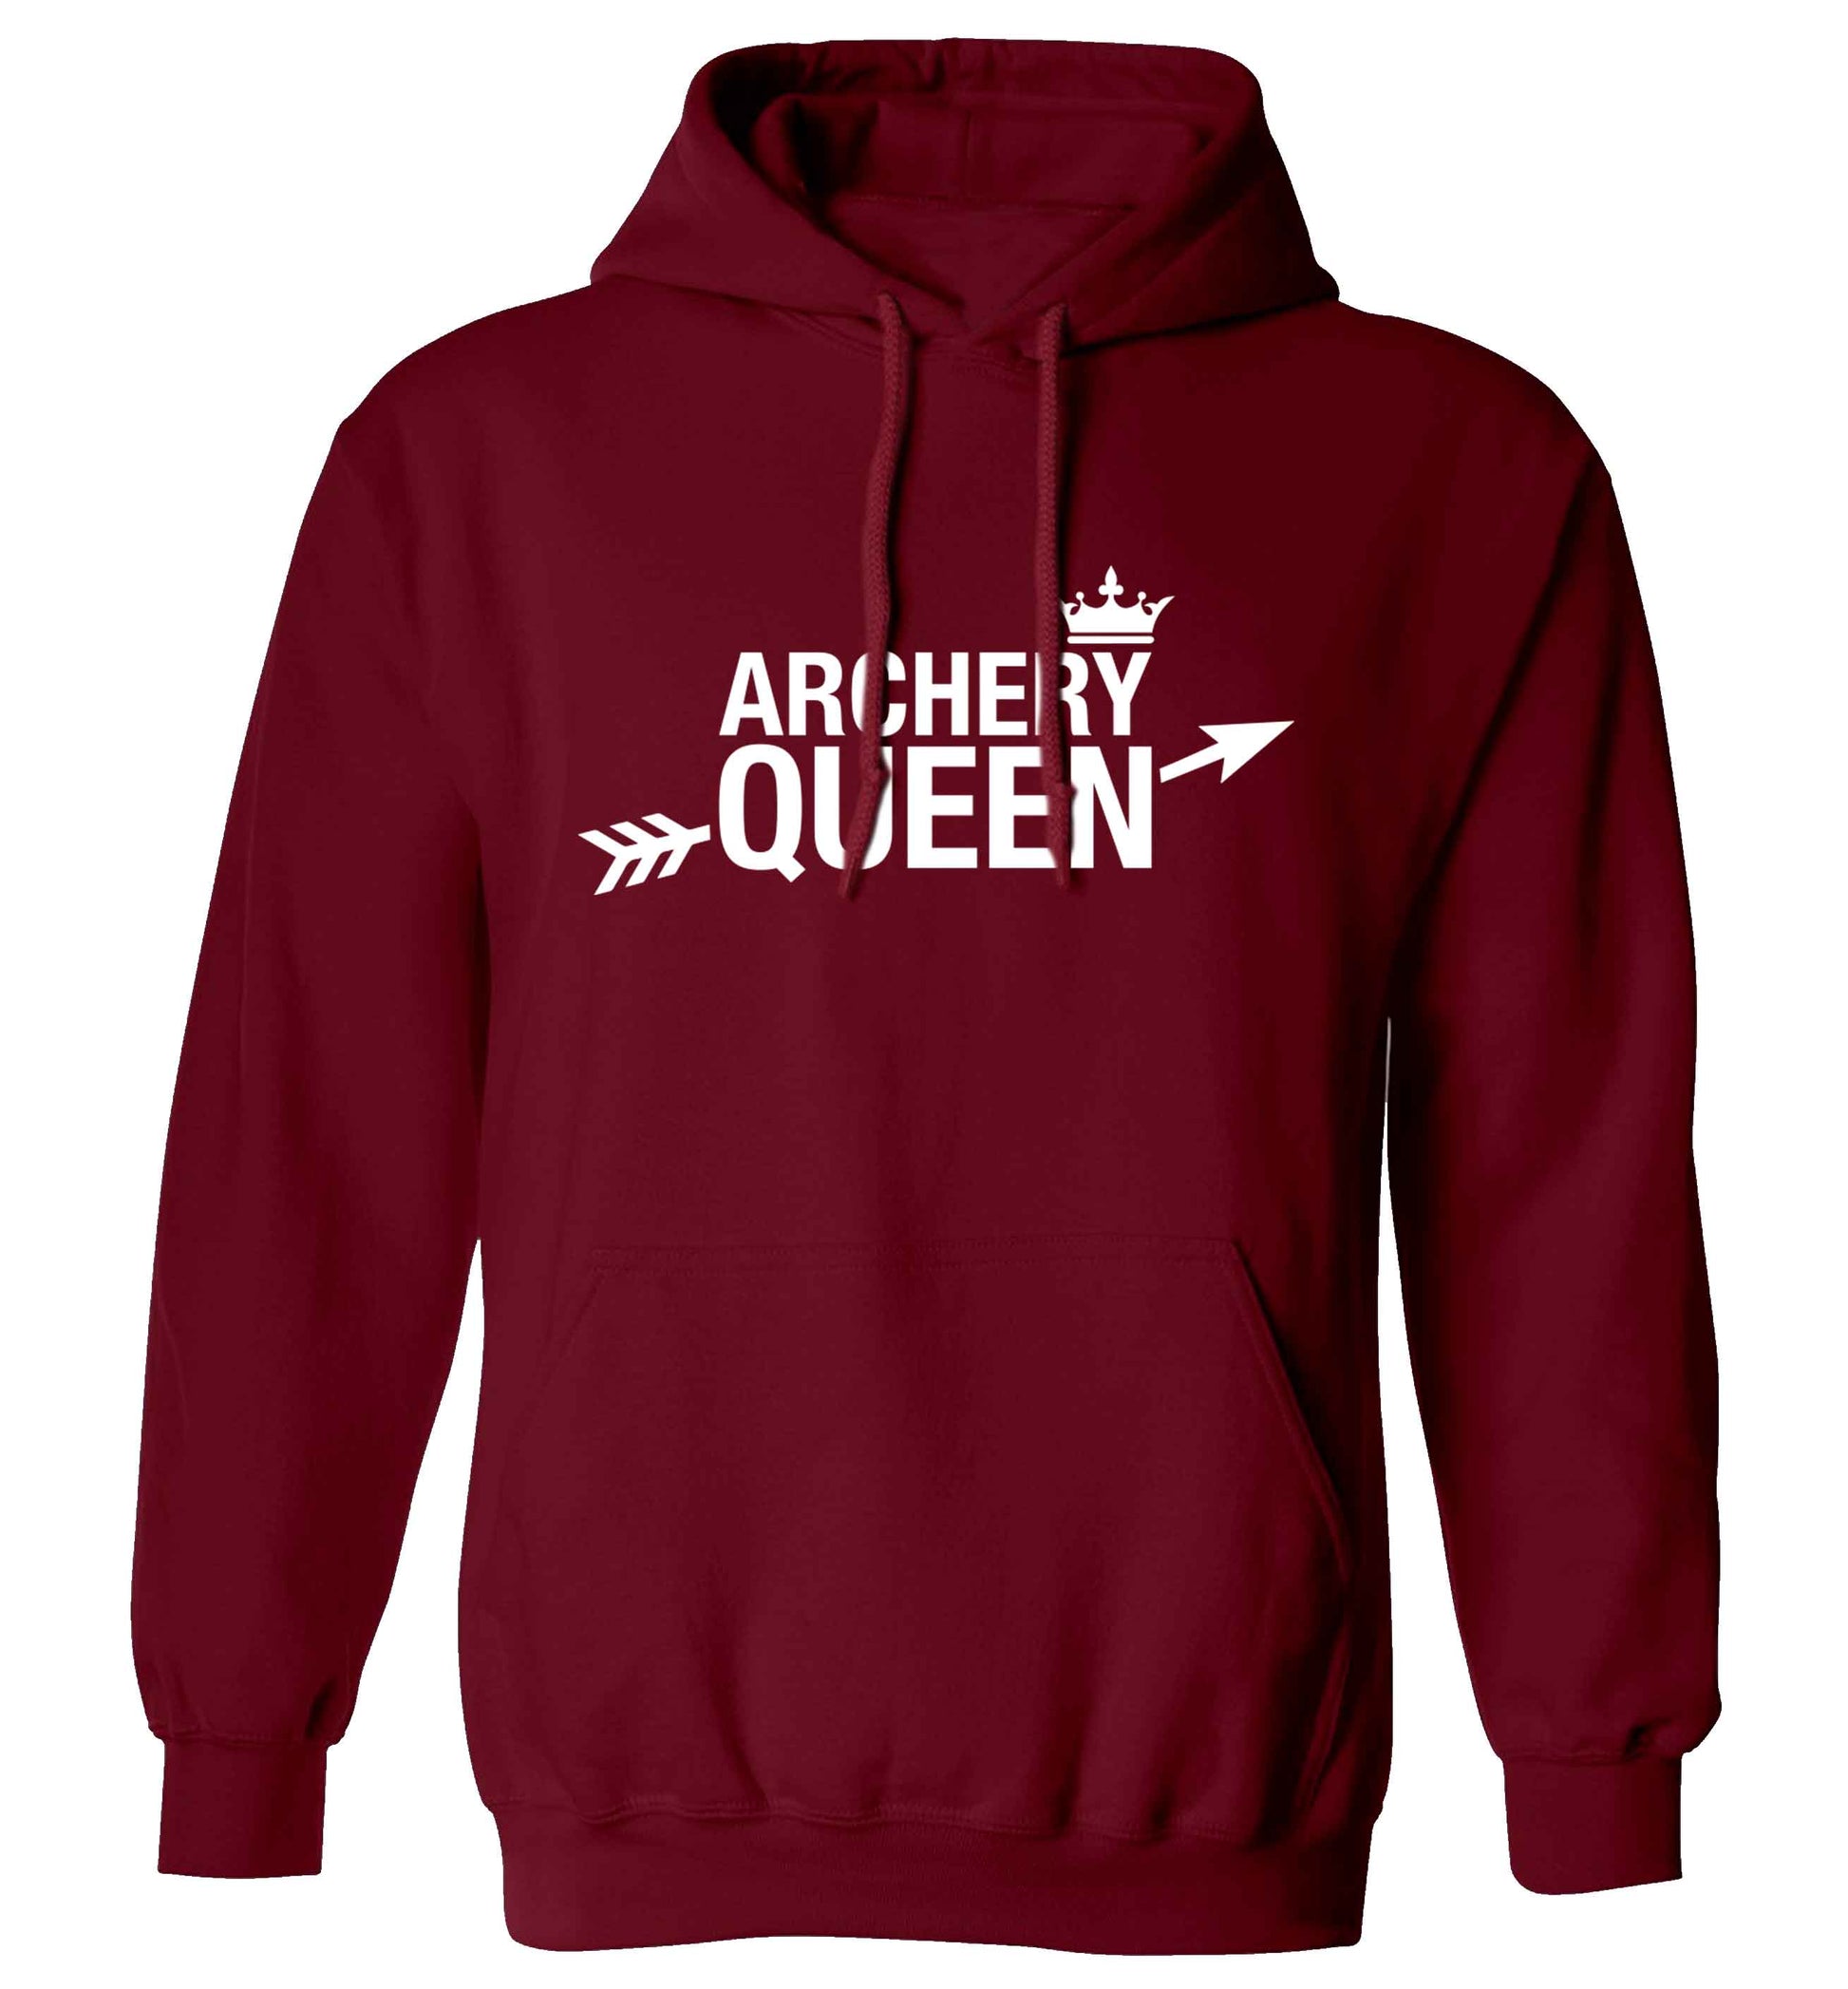 Archery queen adults unisex maroon hoodie 2XL